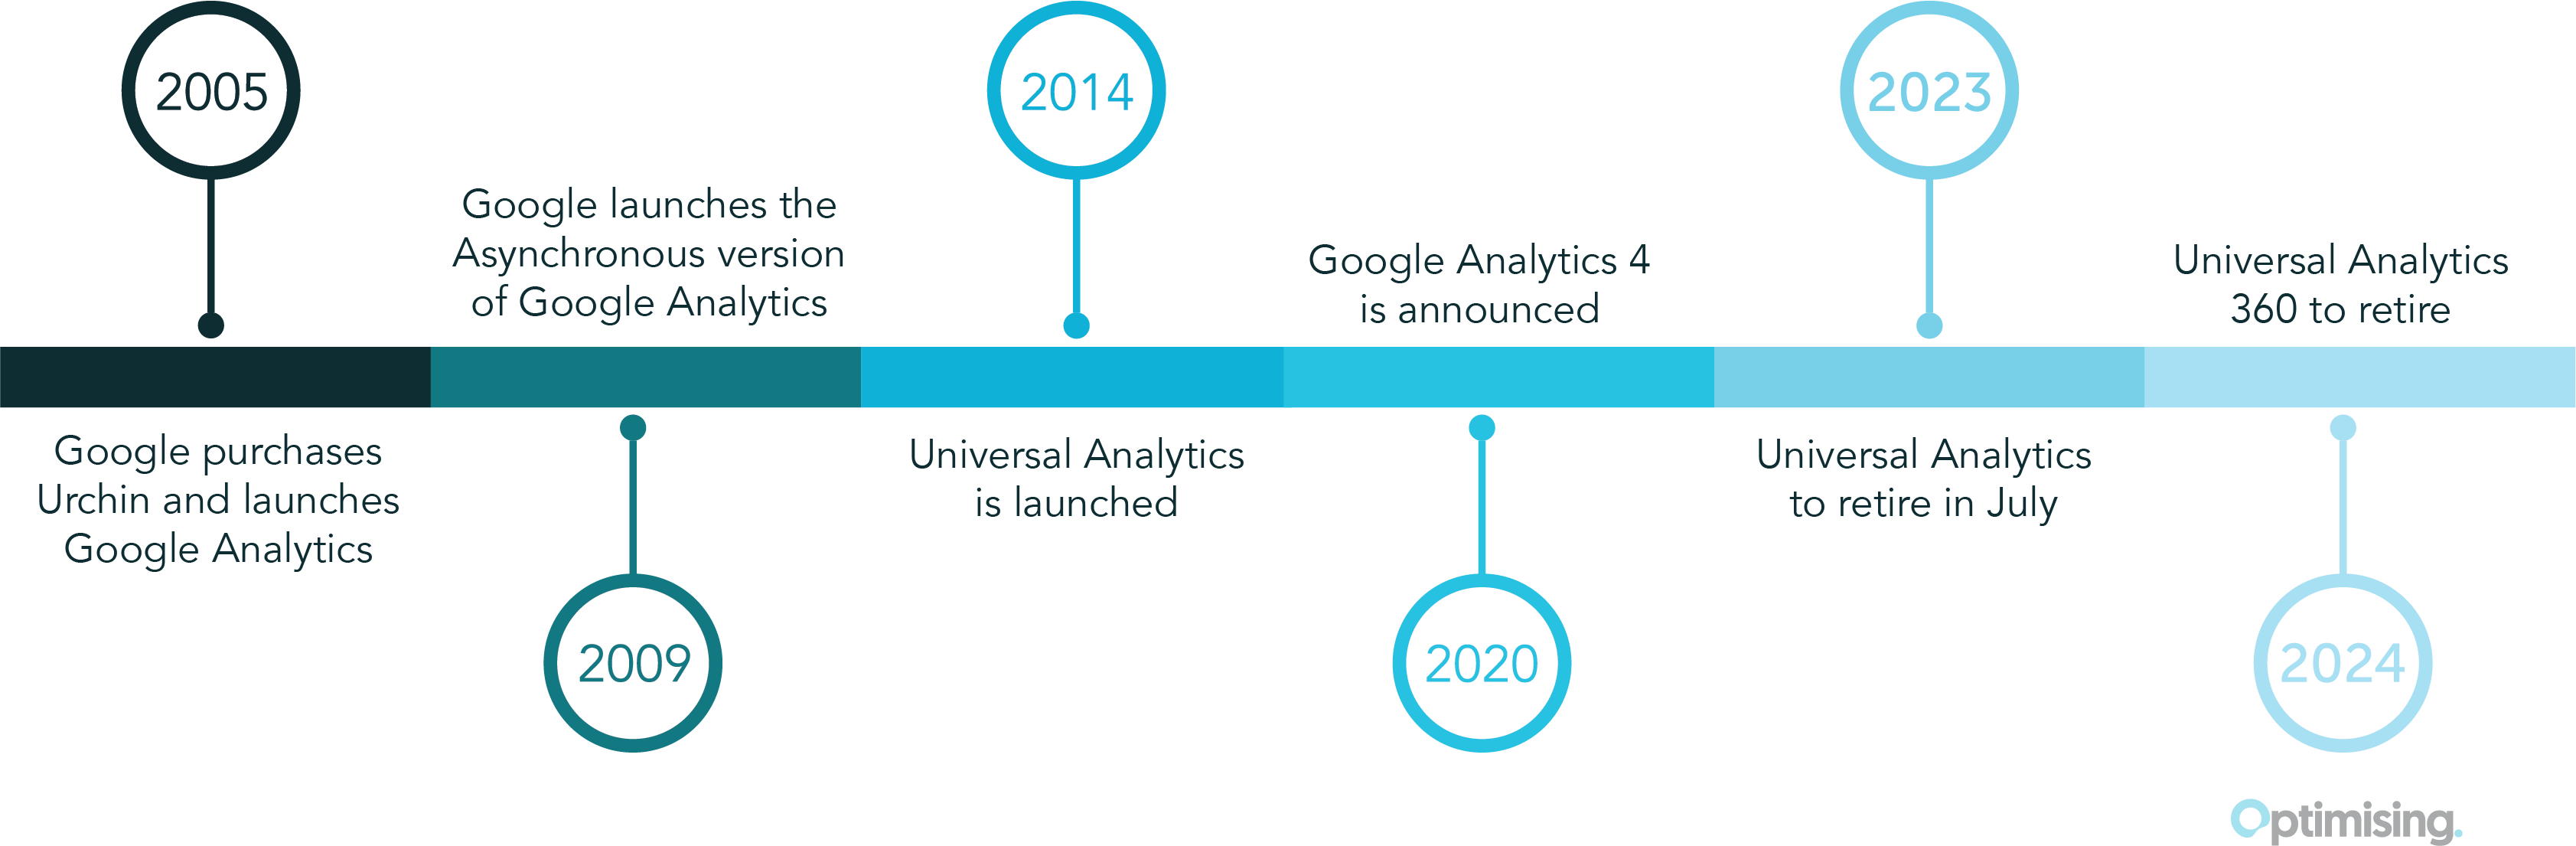 Optimising Google Analytics Timeline Graphic